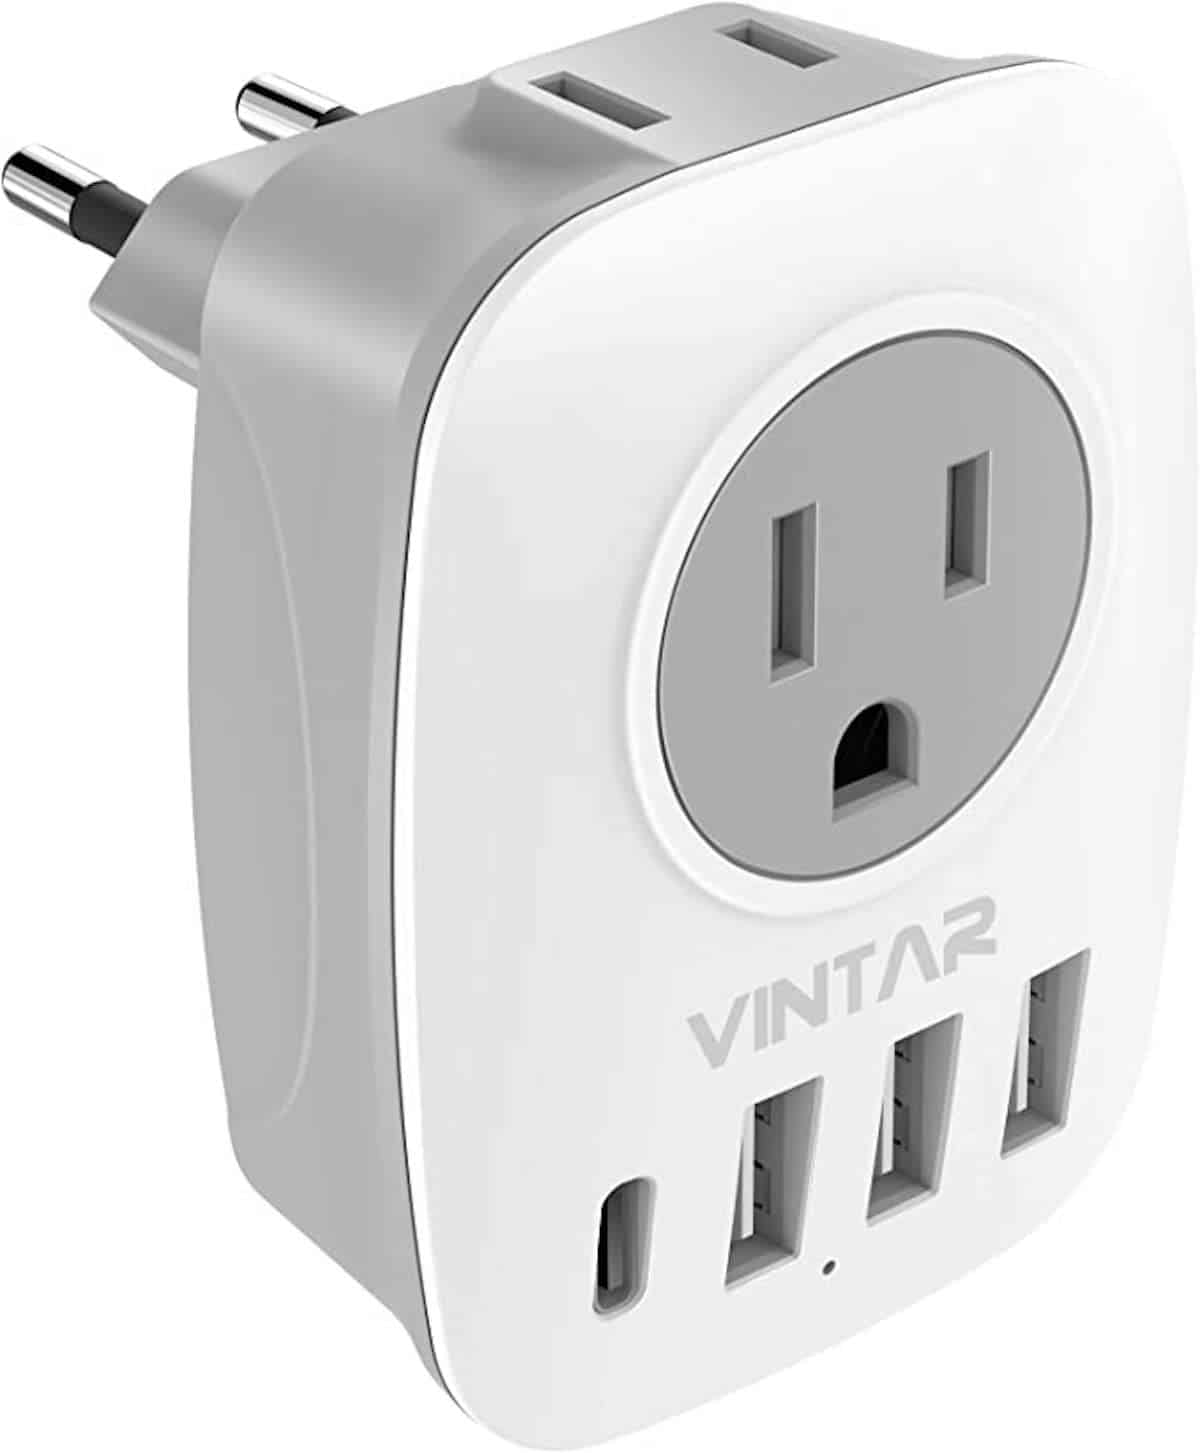 Vintar Travel Plug Adaptor